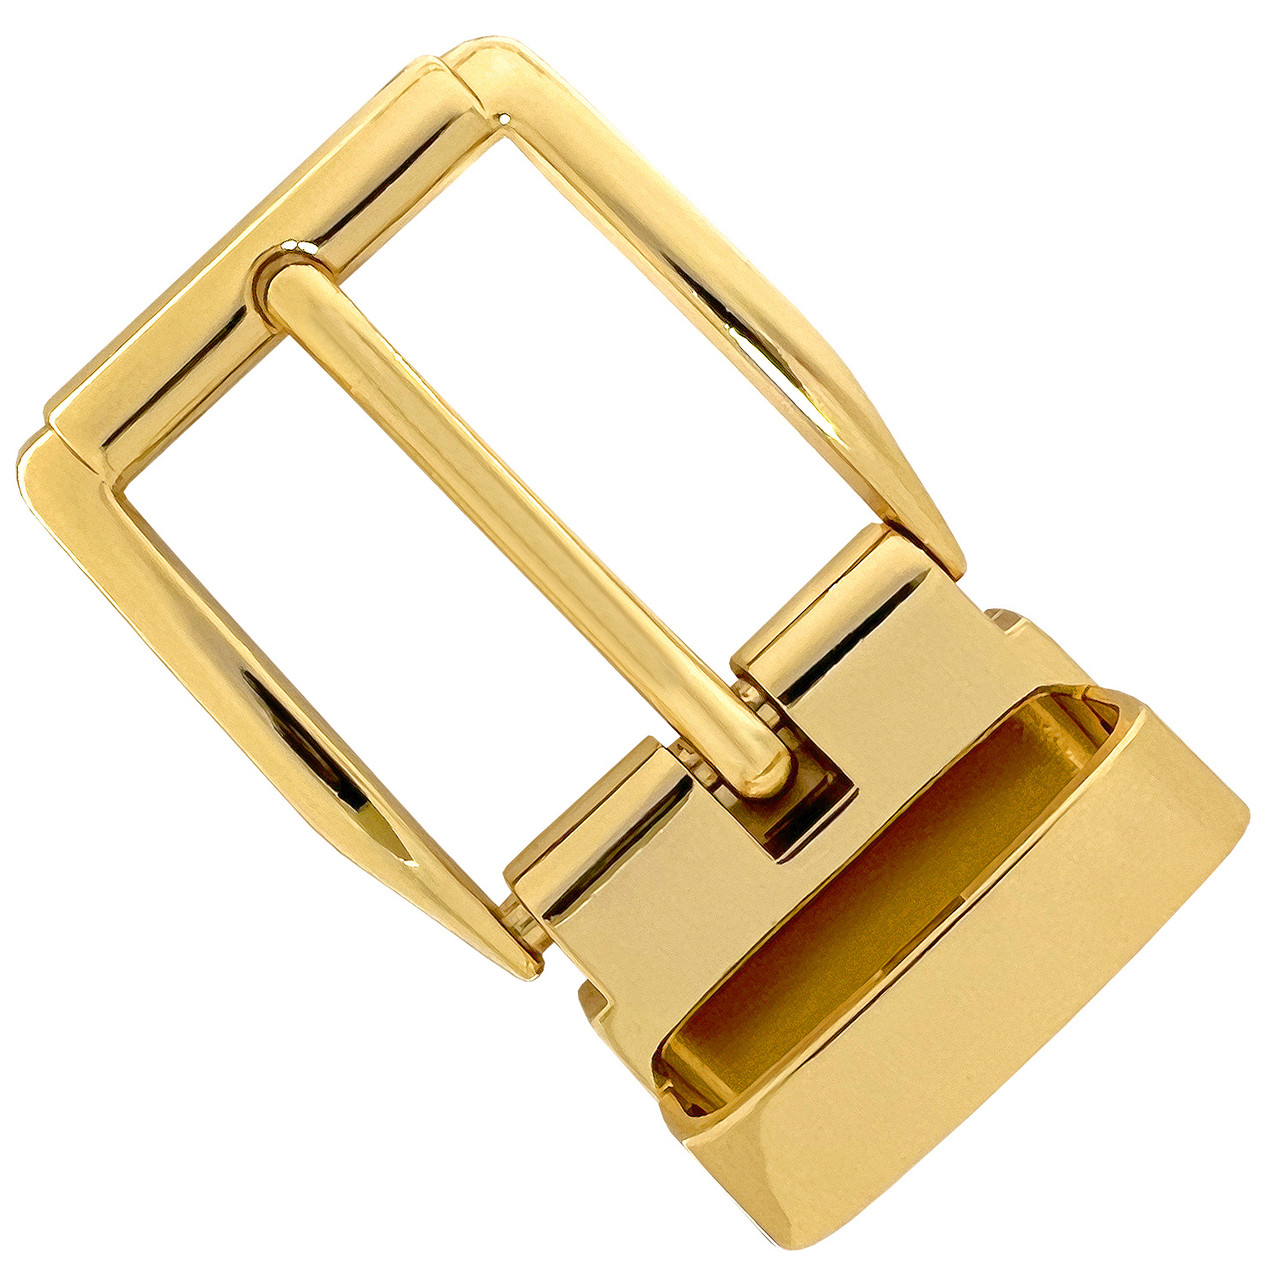 Trafalgar 30mm Scallop Edge Plaque Compression Belt Buckle, Gold